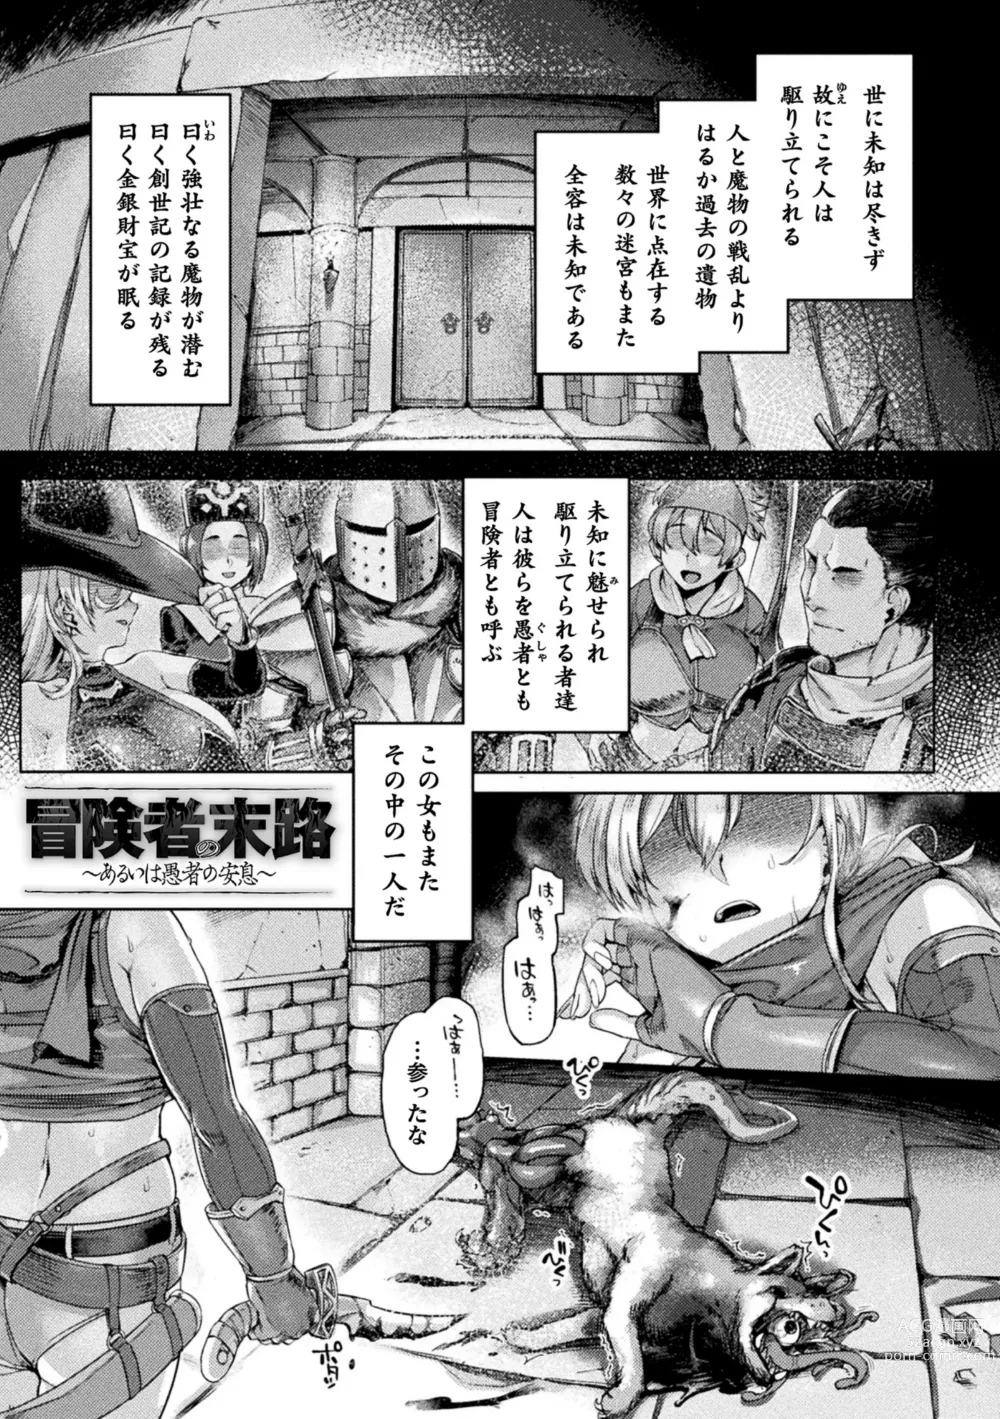 Page 5 of manga Kusshita Otome ga Ochiru Koro - When a surrendered maiden becomes sexually degraded